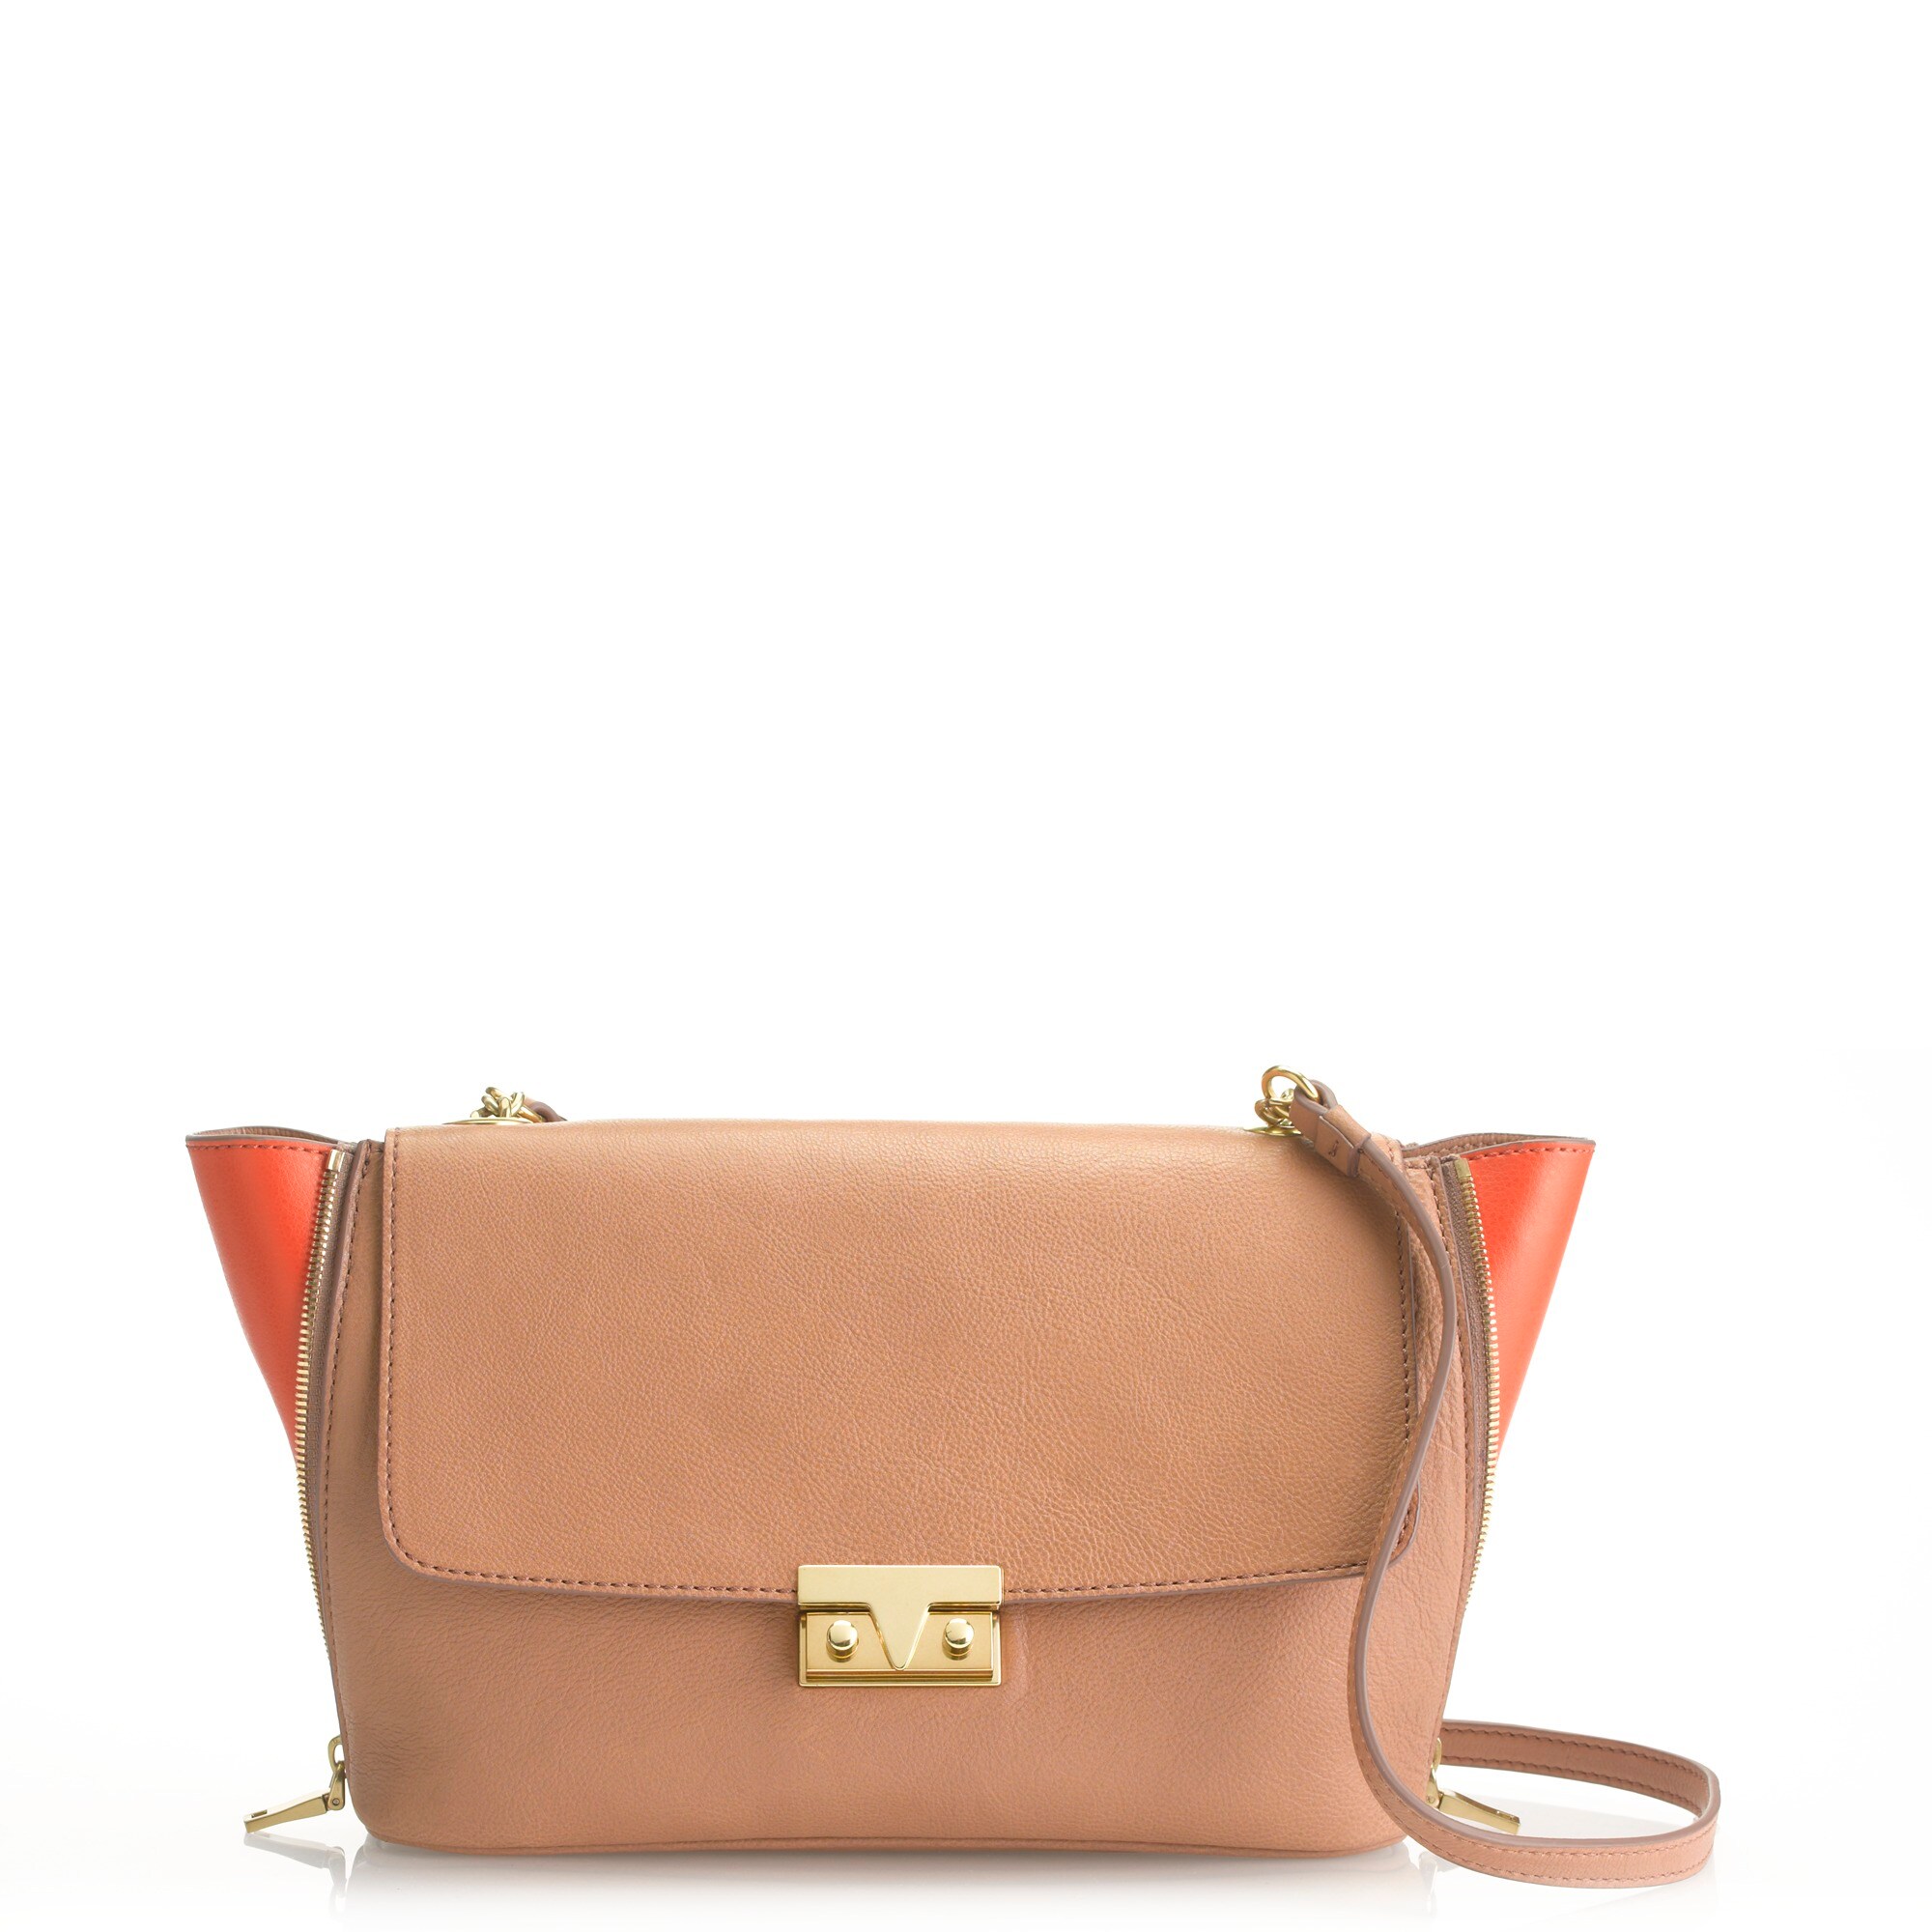 Goodwinn purse : | J.Crew